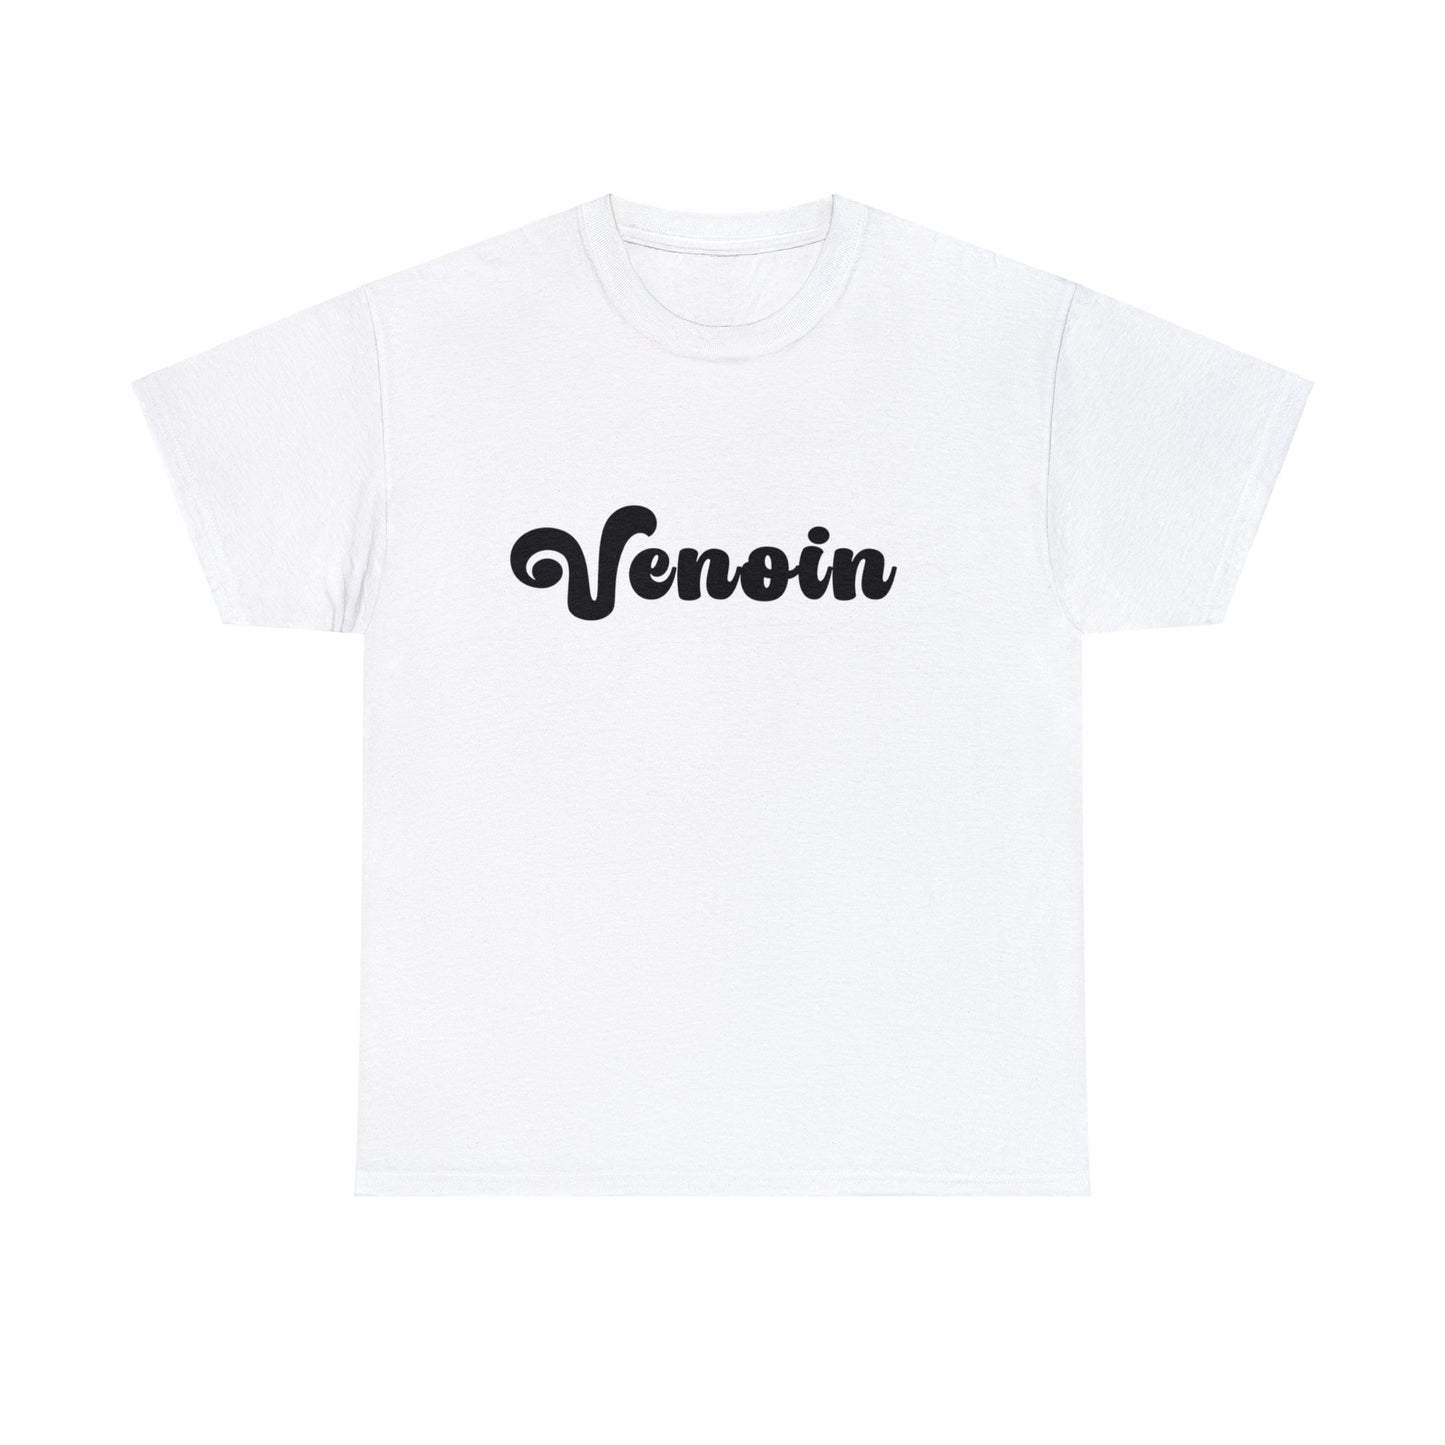 Int Oilsjters - Tshirt - Venoin